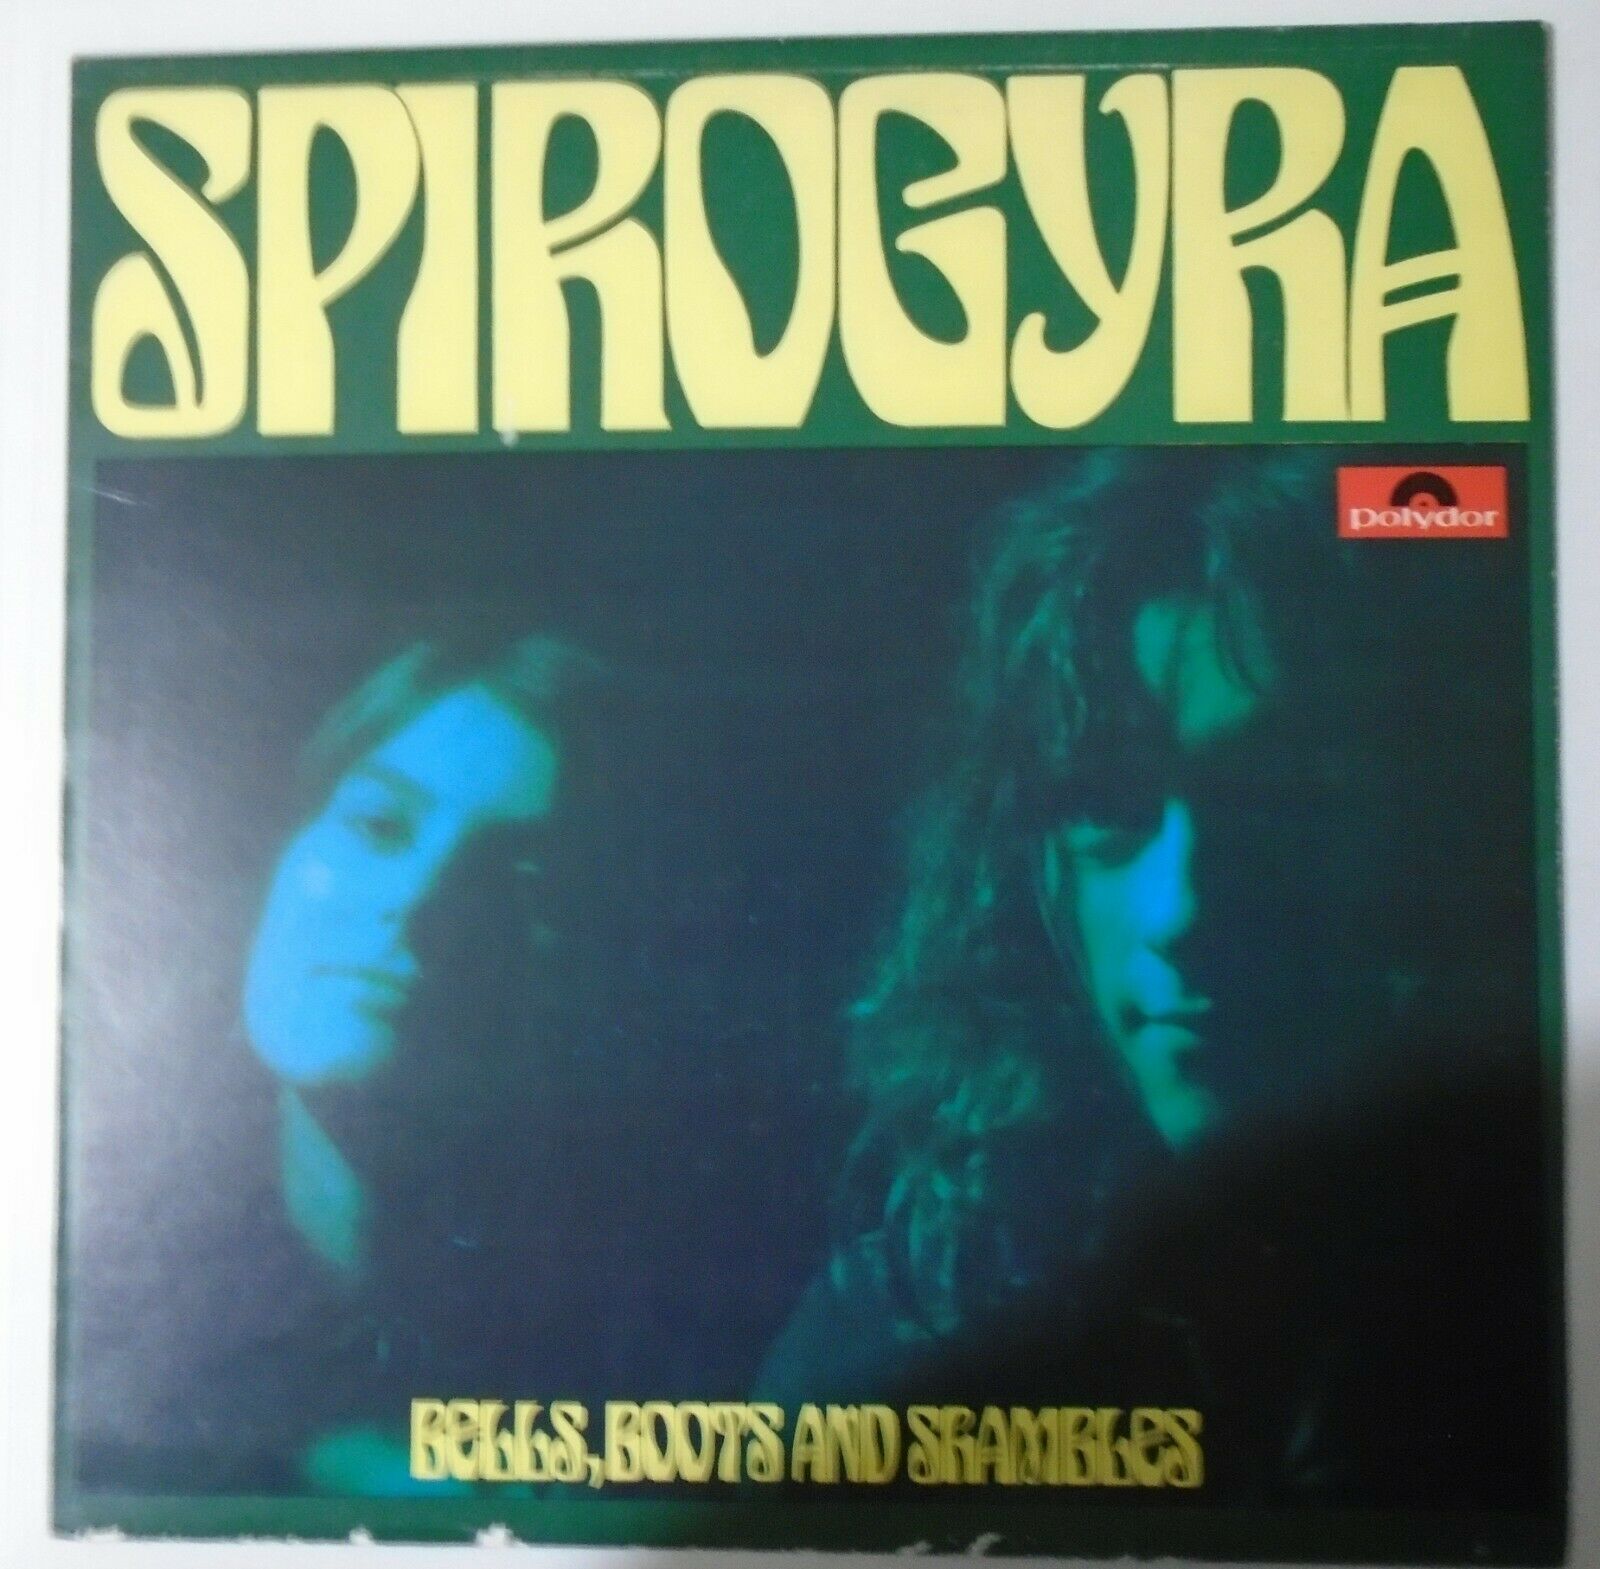 SPIROGYRA,Bells,Boots And Shambles.Rare 1973 Vinyl LP in Ex Condition.2310 246.